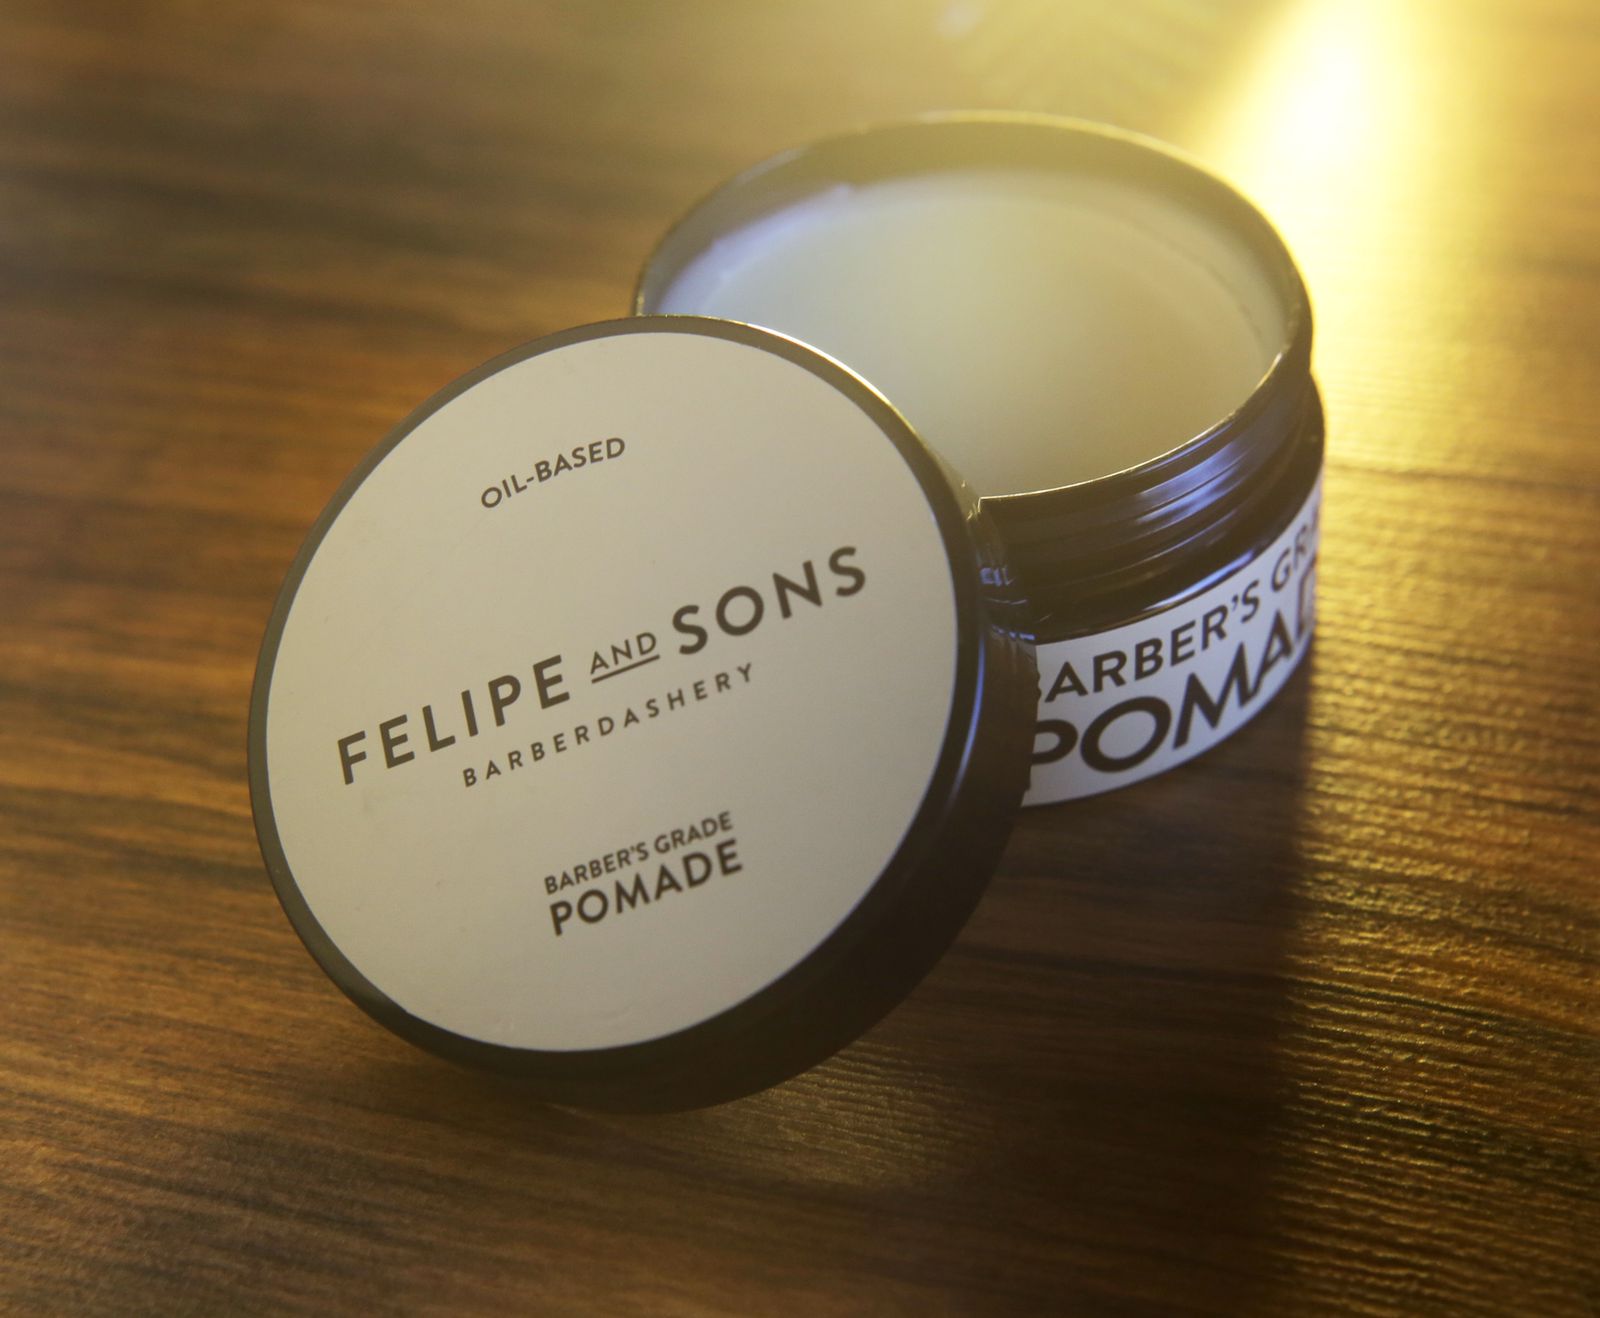 Felipe And Sons ₱300 PH Gift Card